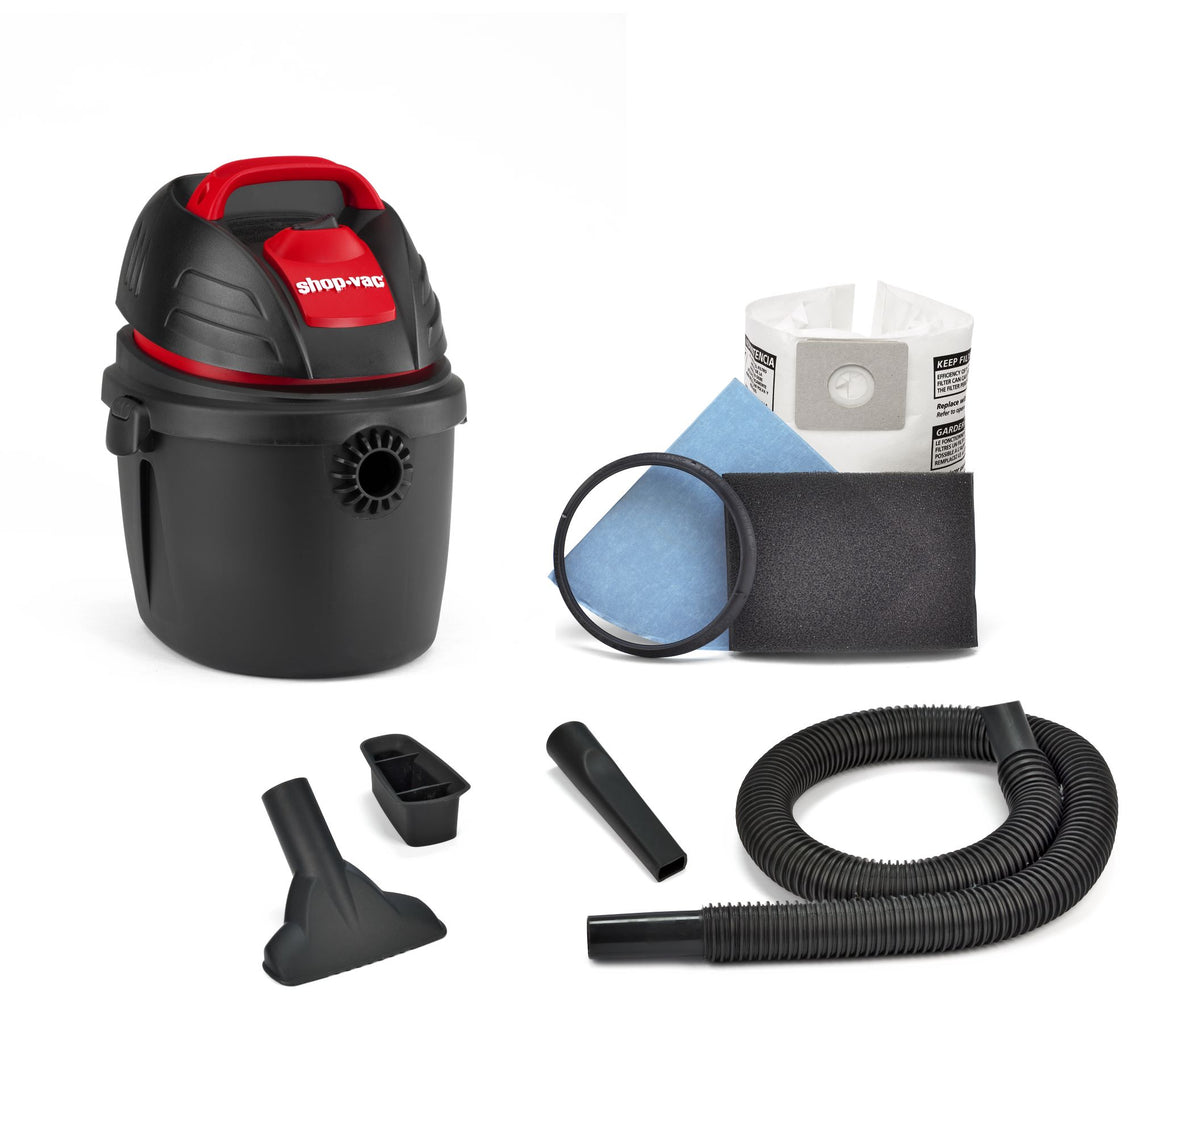 ShopVac 2.5 Gallon 2.5 Peak HP Wet/Dry Portable Vacuum